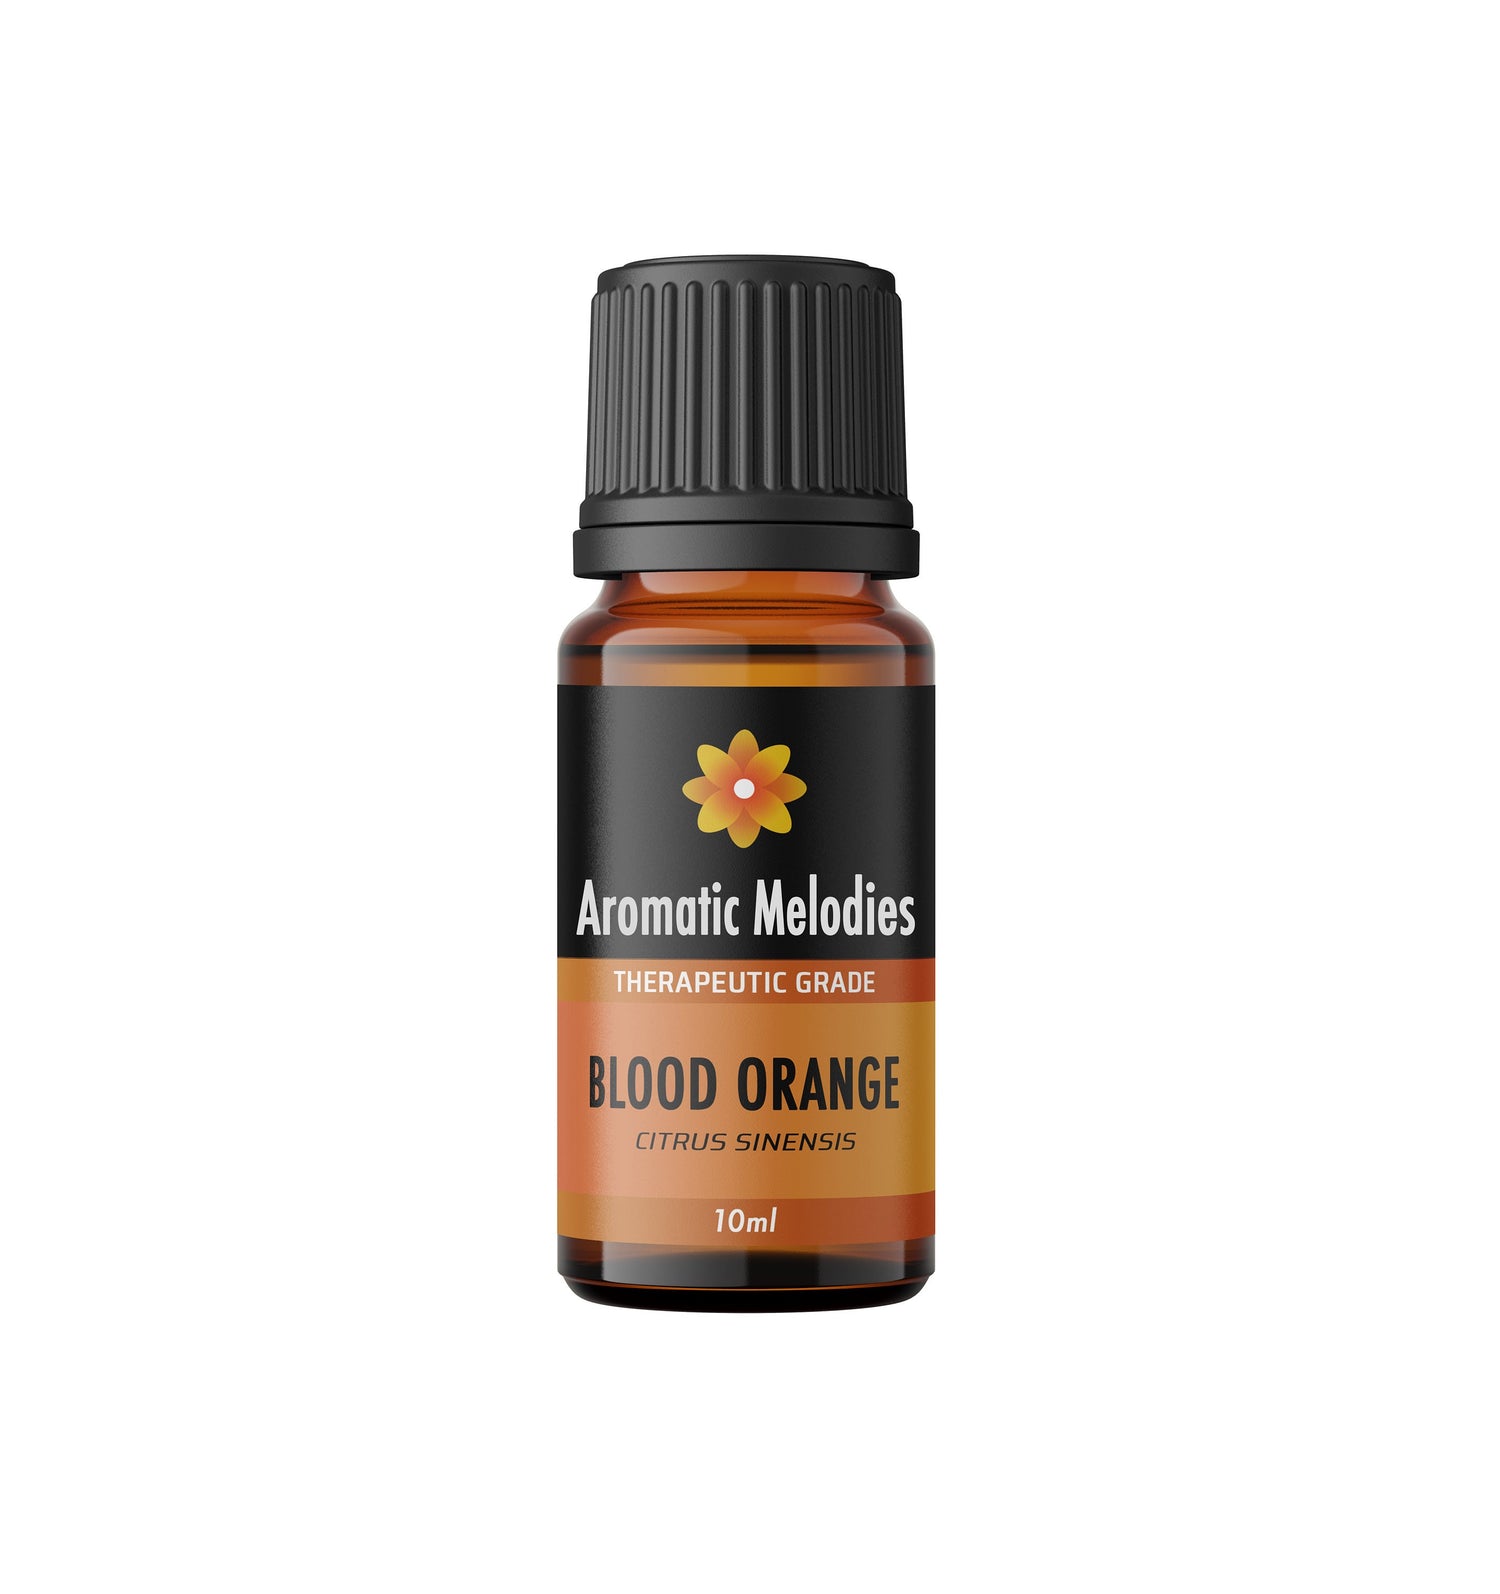 Blood Orange Essential Oil - Premium 100% Natural Therapeutic Grade - Oil Diffuser, Massage, Fragrance, Soap, Candles